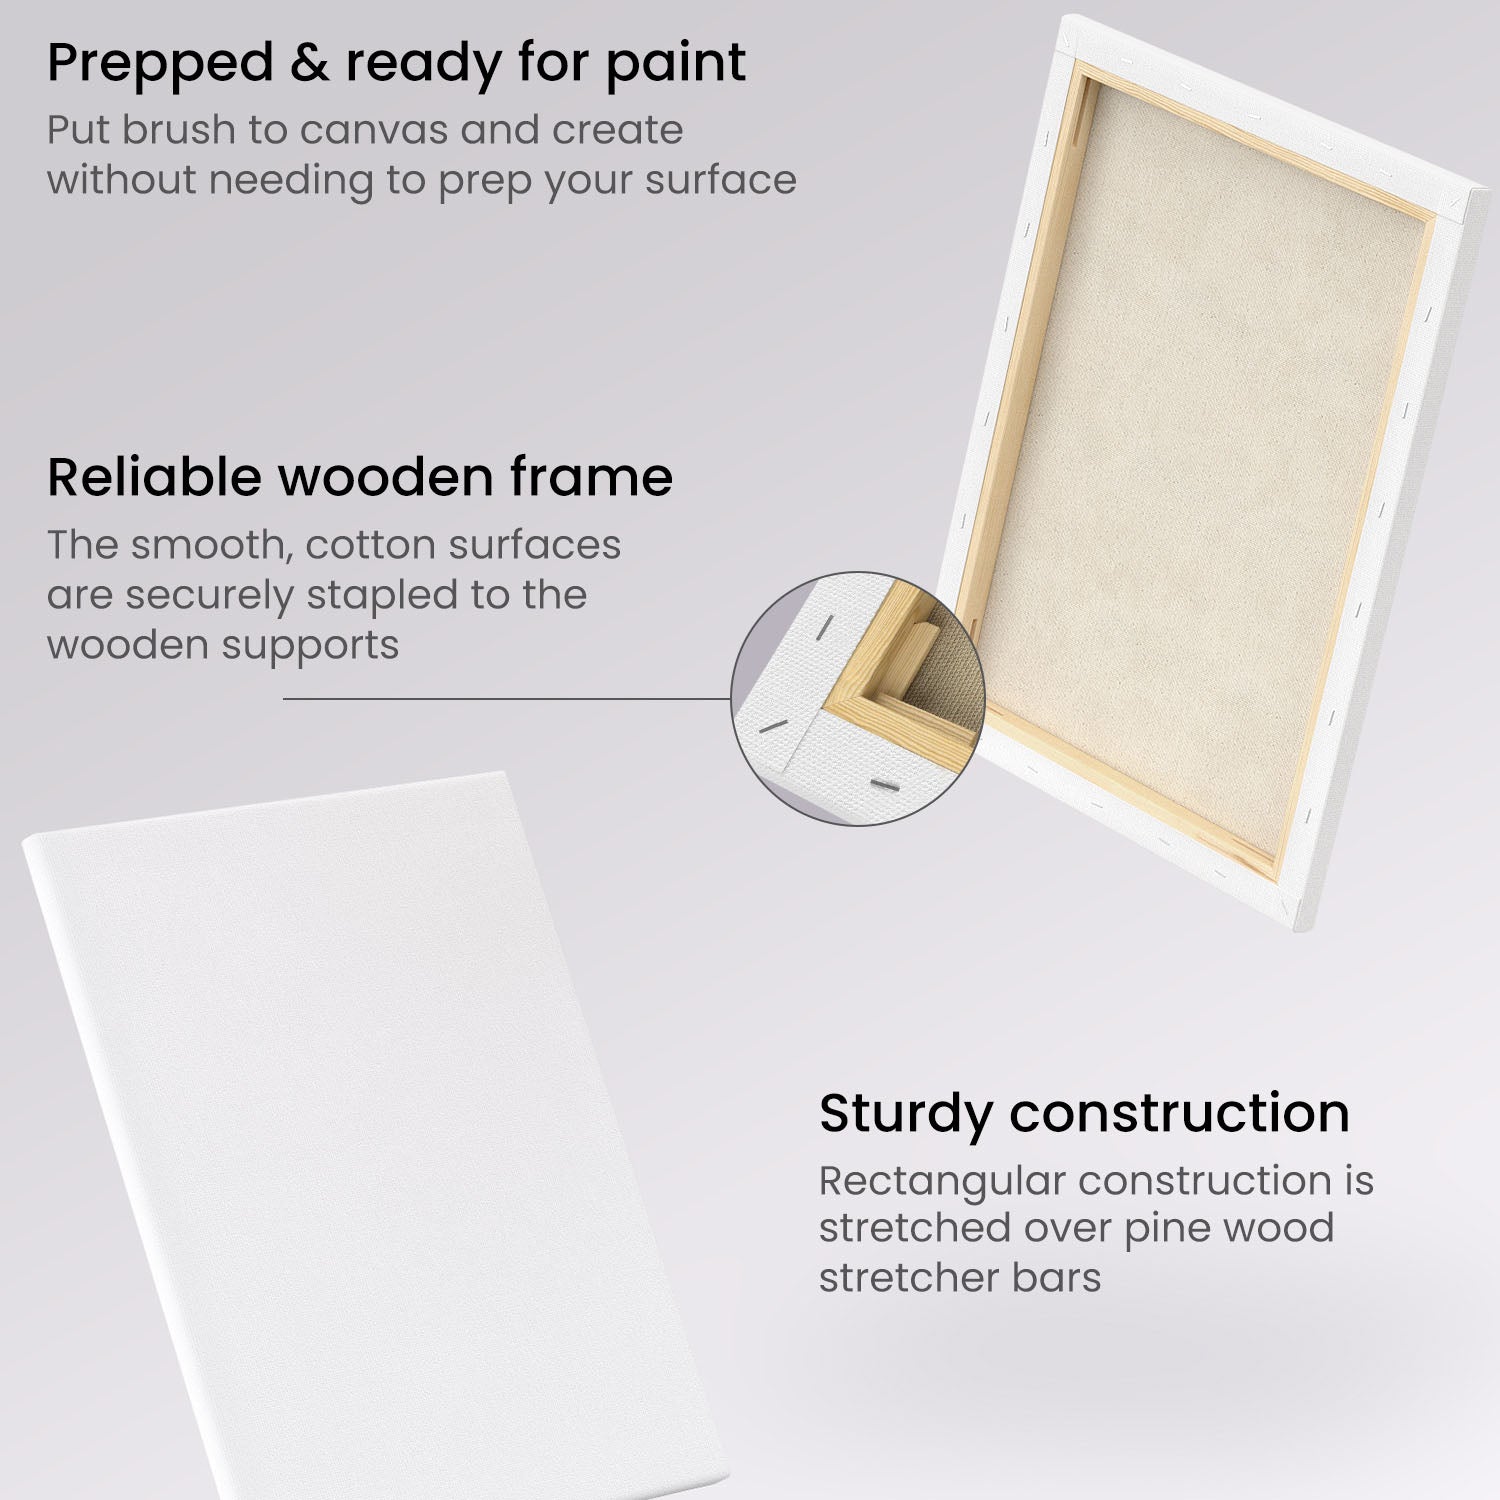 Arteza Wood Art Panels Art Supply Pack, 10x10 - 5 Pack